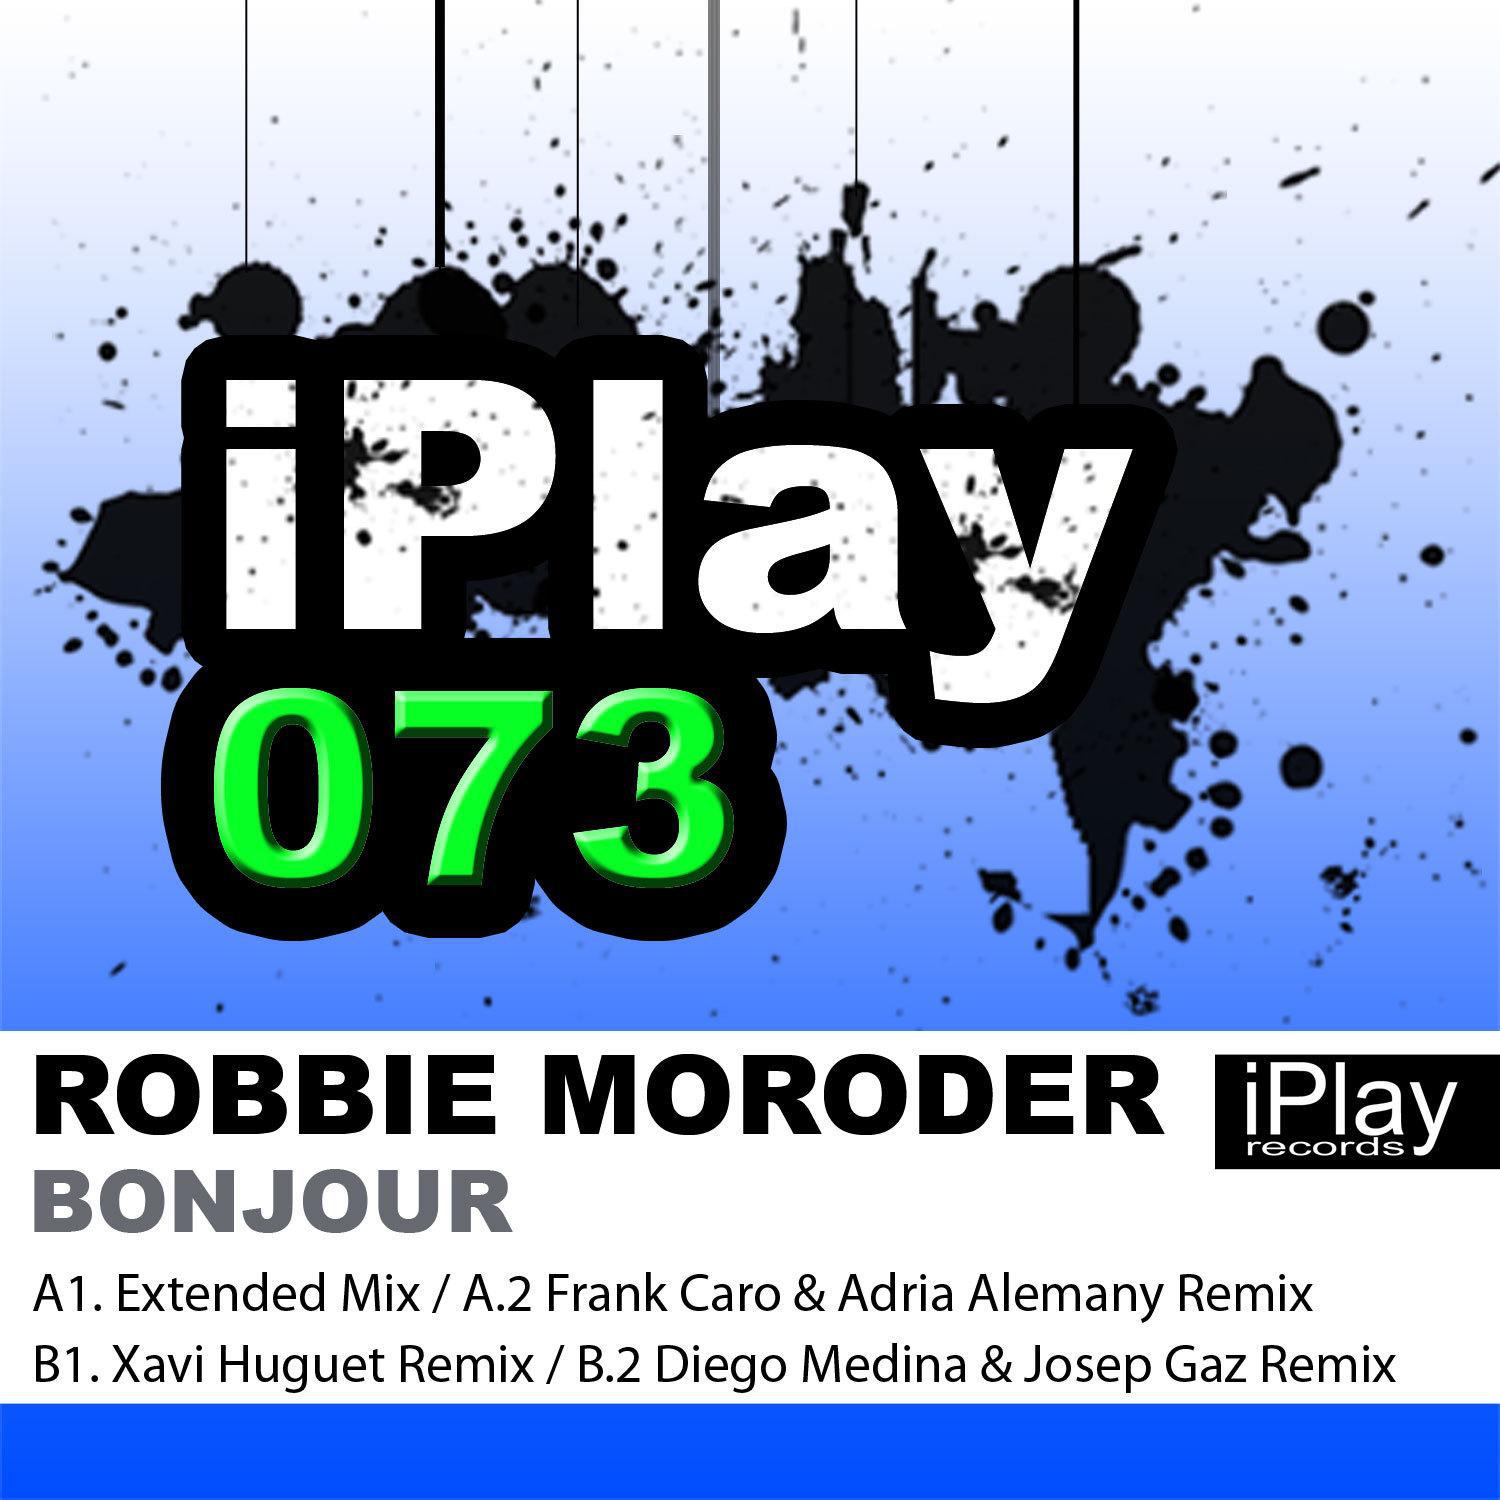 Robbie Moroder - Bonjour (Extended Mix)